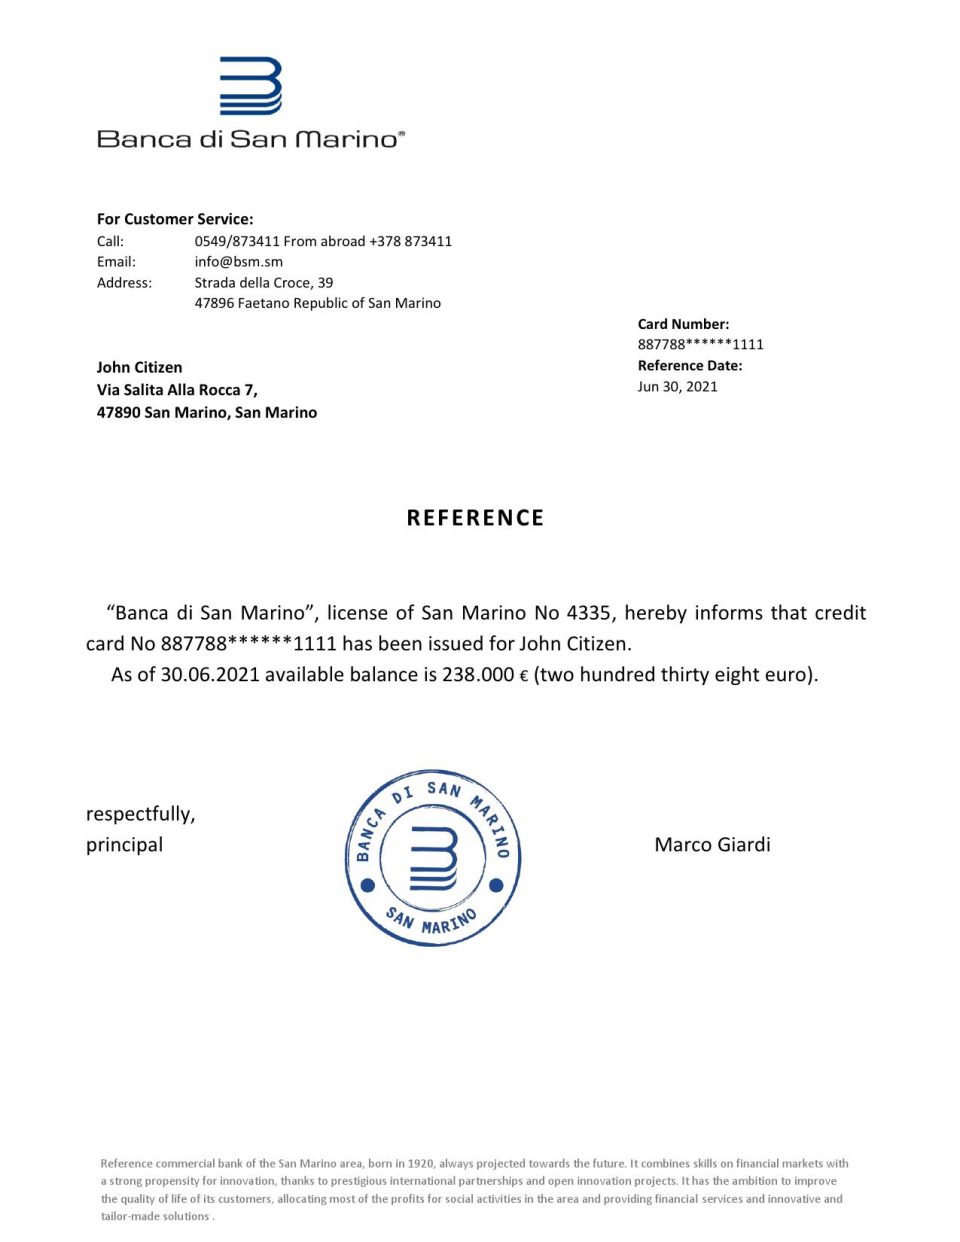 Download San Marino Banca di San Marino Bank Reference Letter Templates | Editable Word